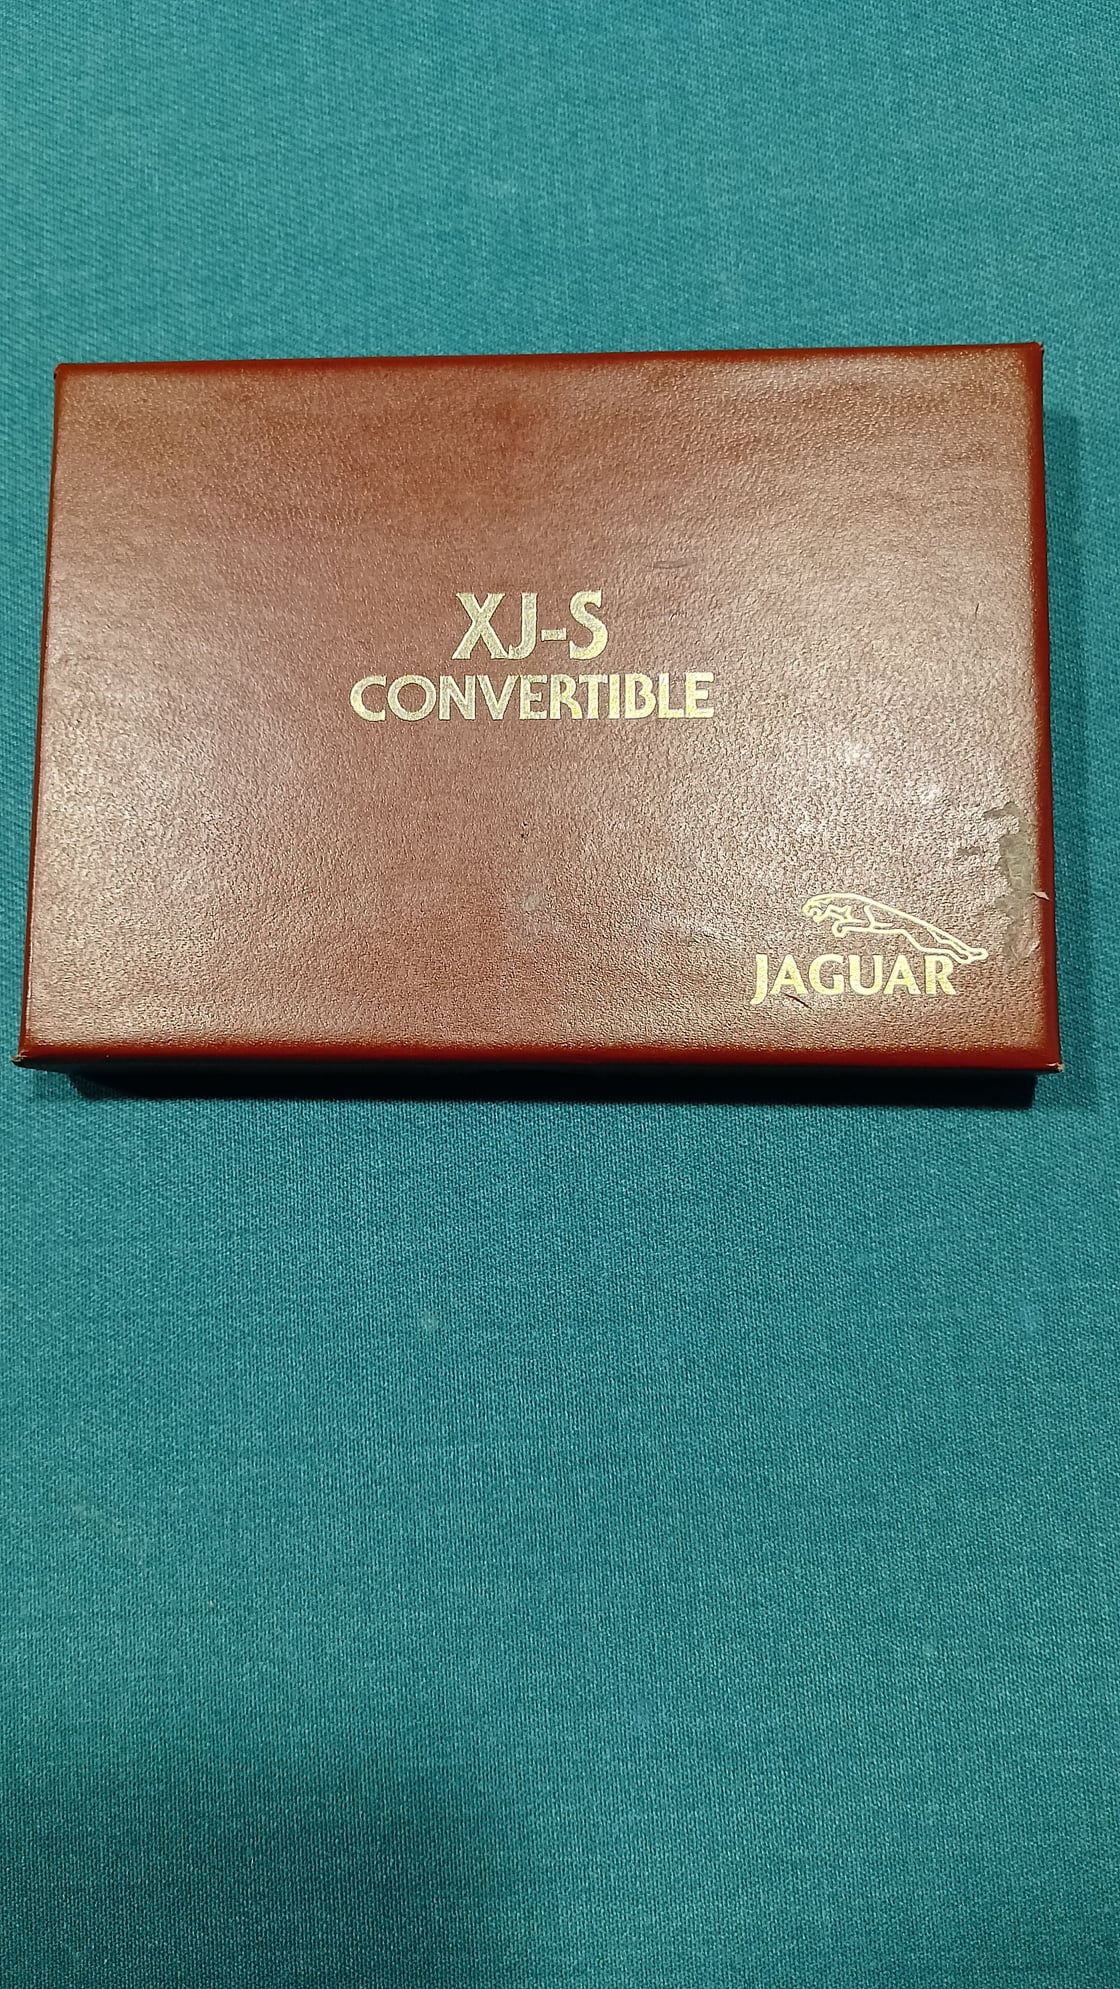 Miscellaneous - Cassette tape for Hess & Eisenhardt XJS convertible. - New - 1986 to 1988 Jaguar XJS - Saluda, NC 28773, United States